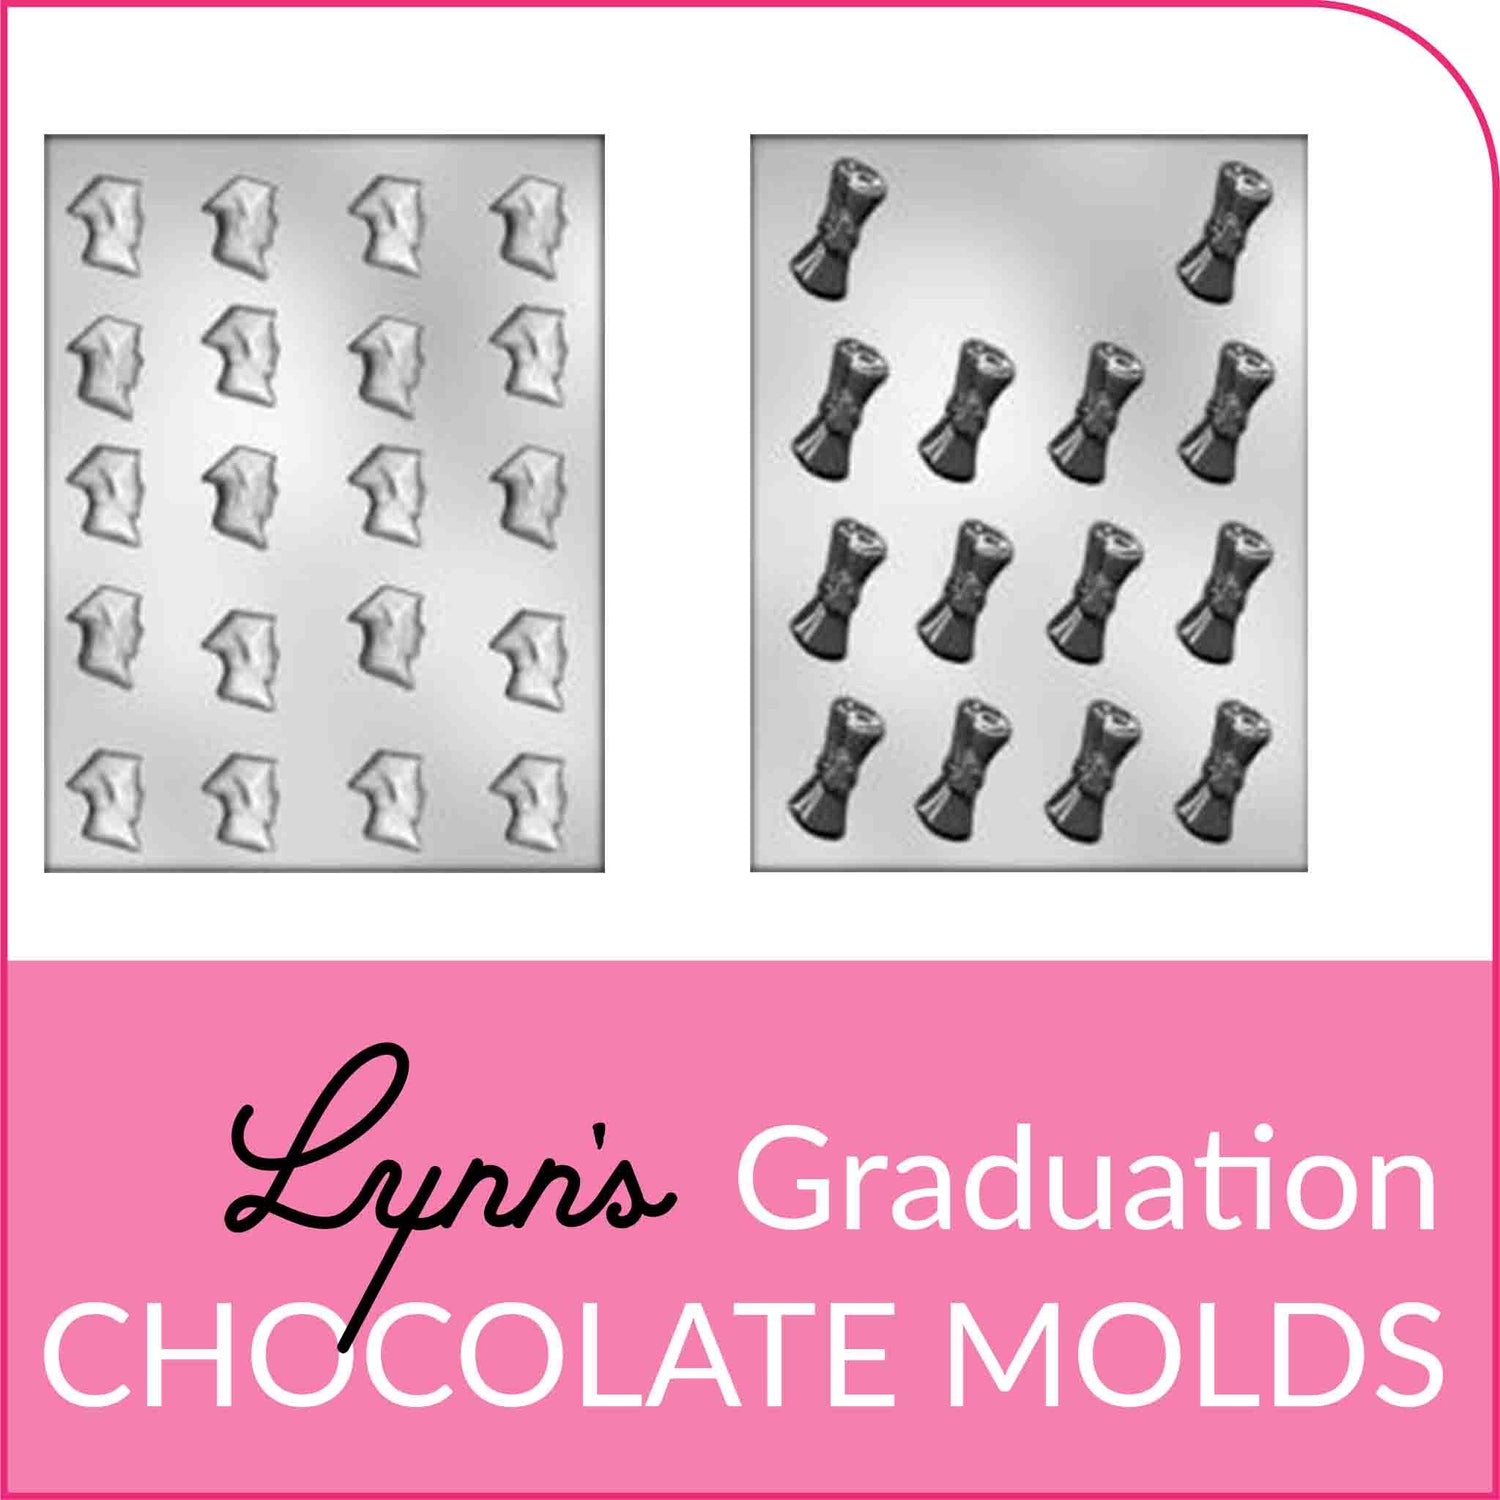 Shop Graduation Chocolate Molds from Lynn's